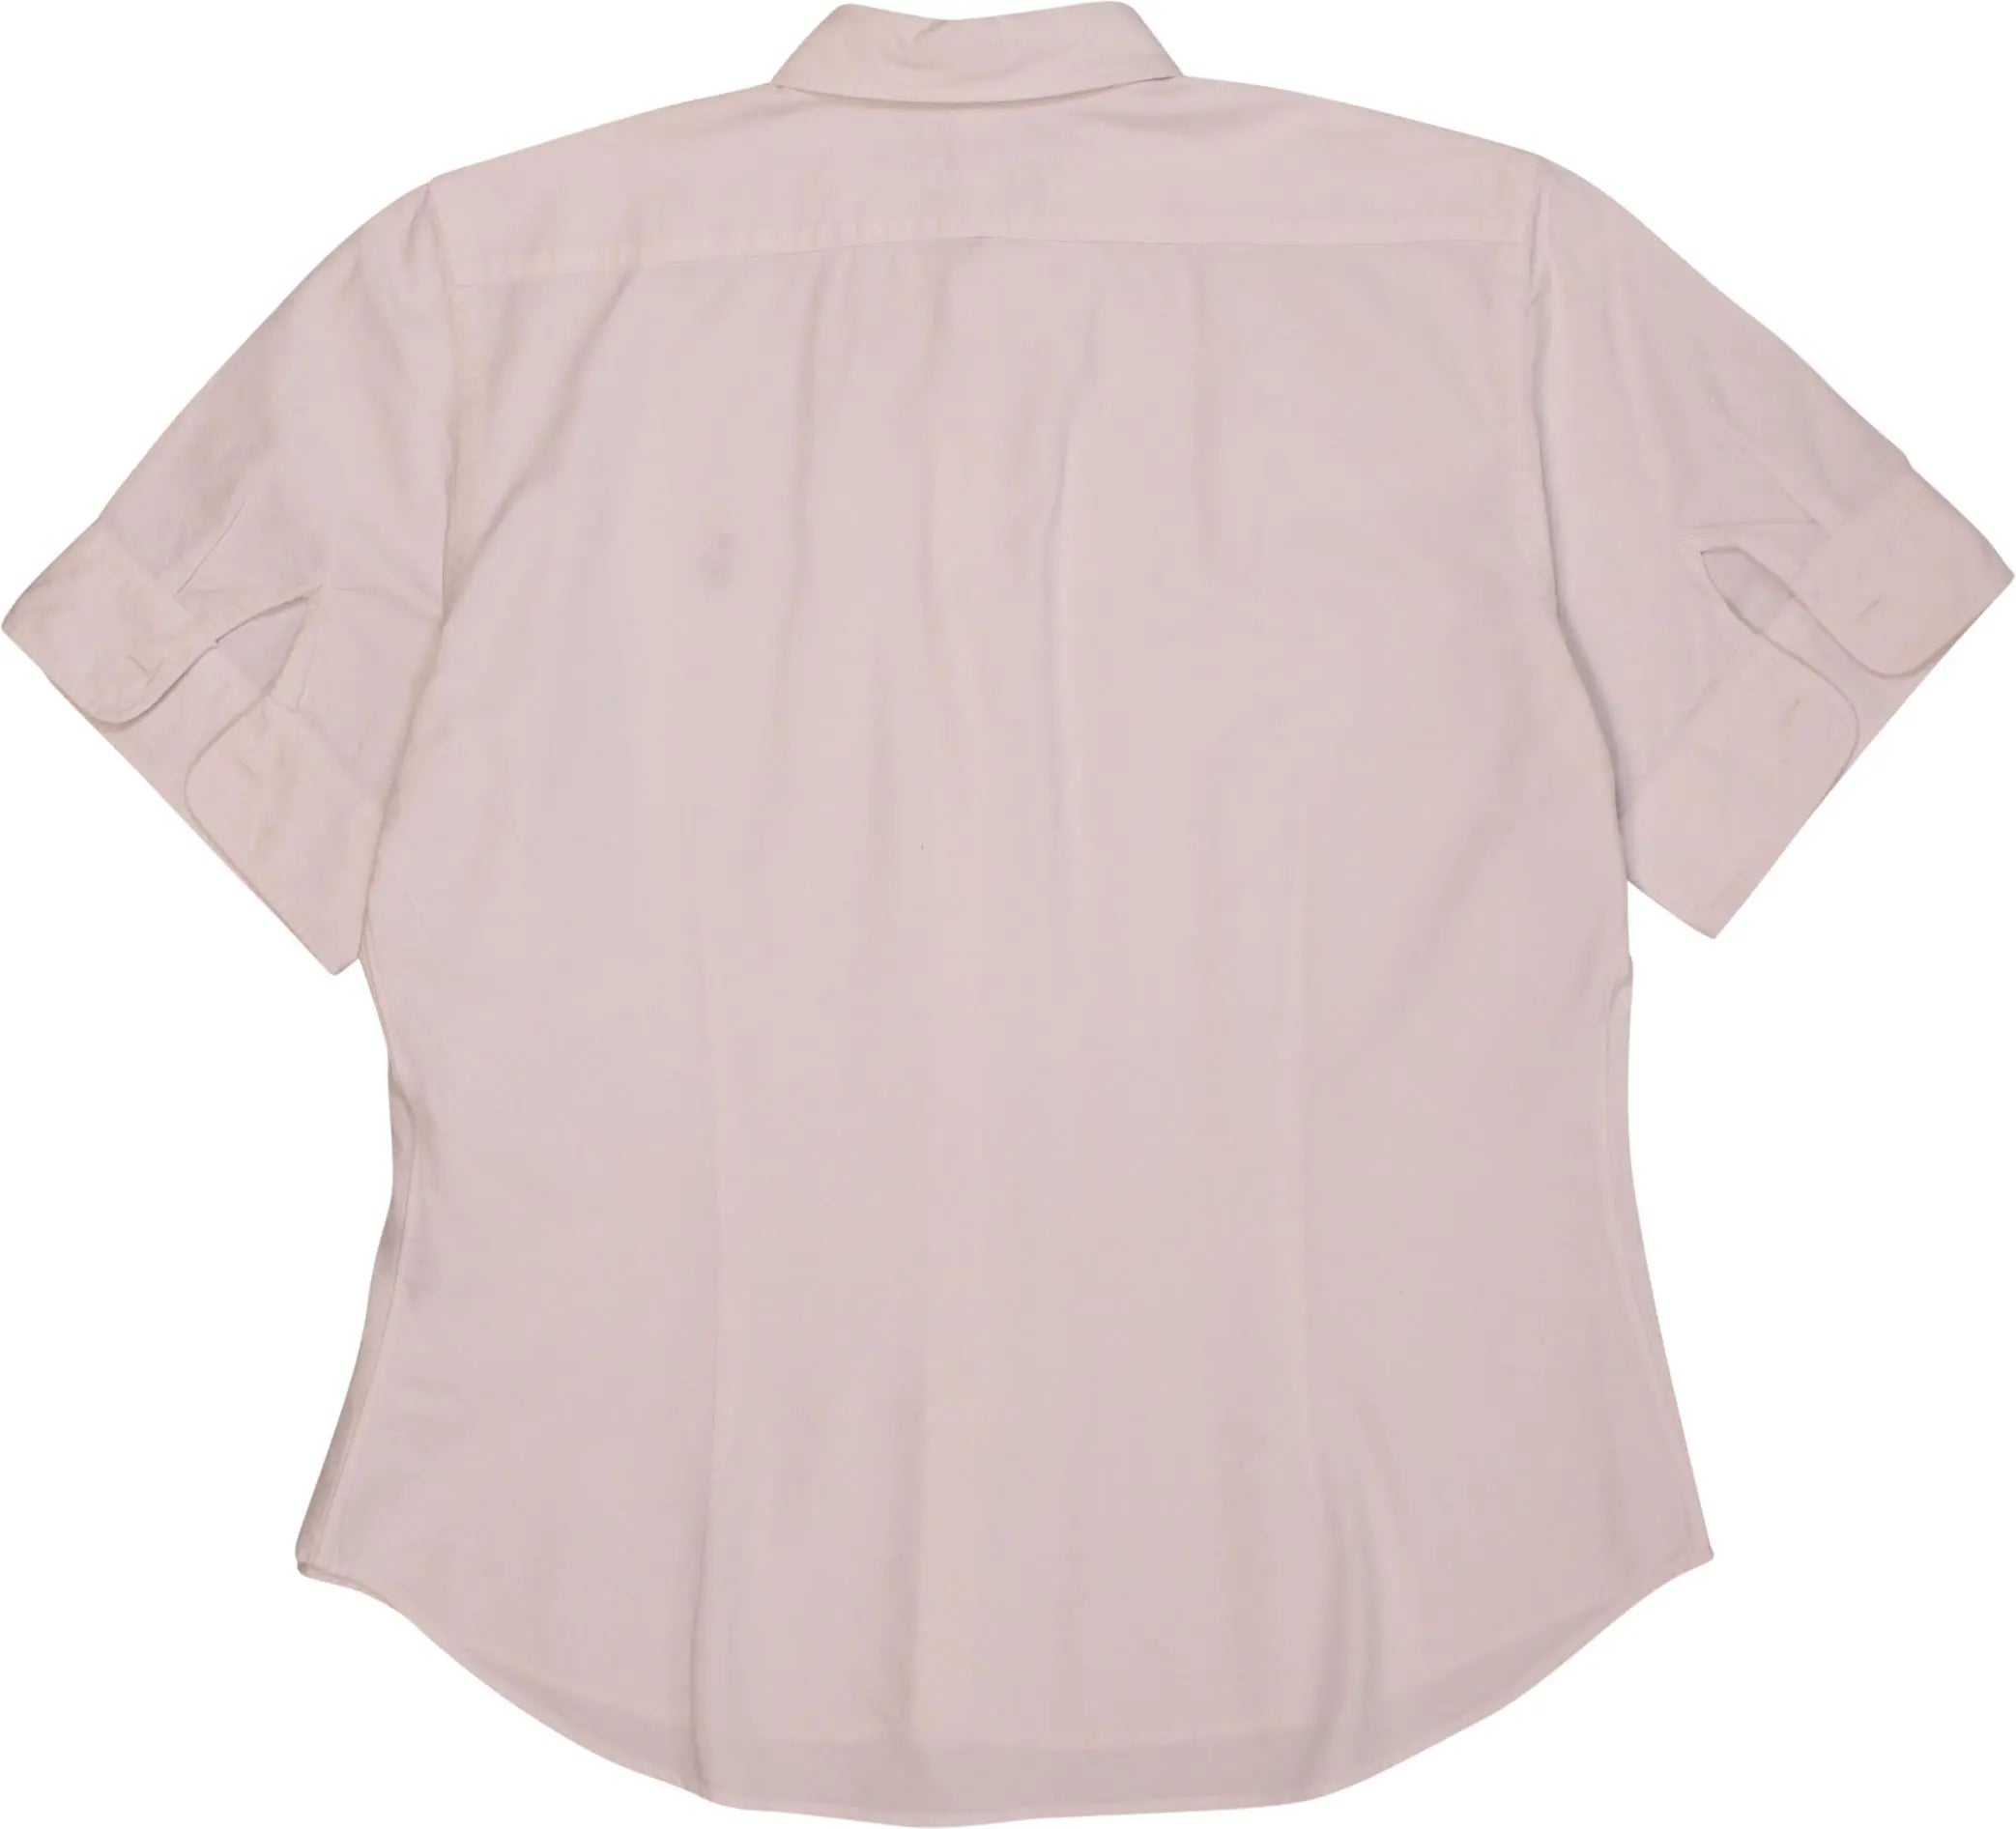 Ralph Lauren - White Short Sleeve Shirt by Ralph Lauren- ThriftTale.com - Vintage and second handclothing